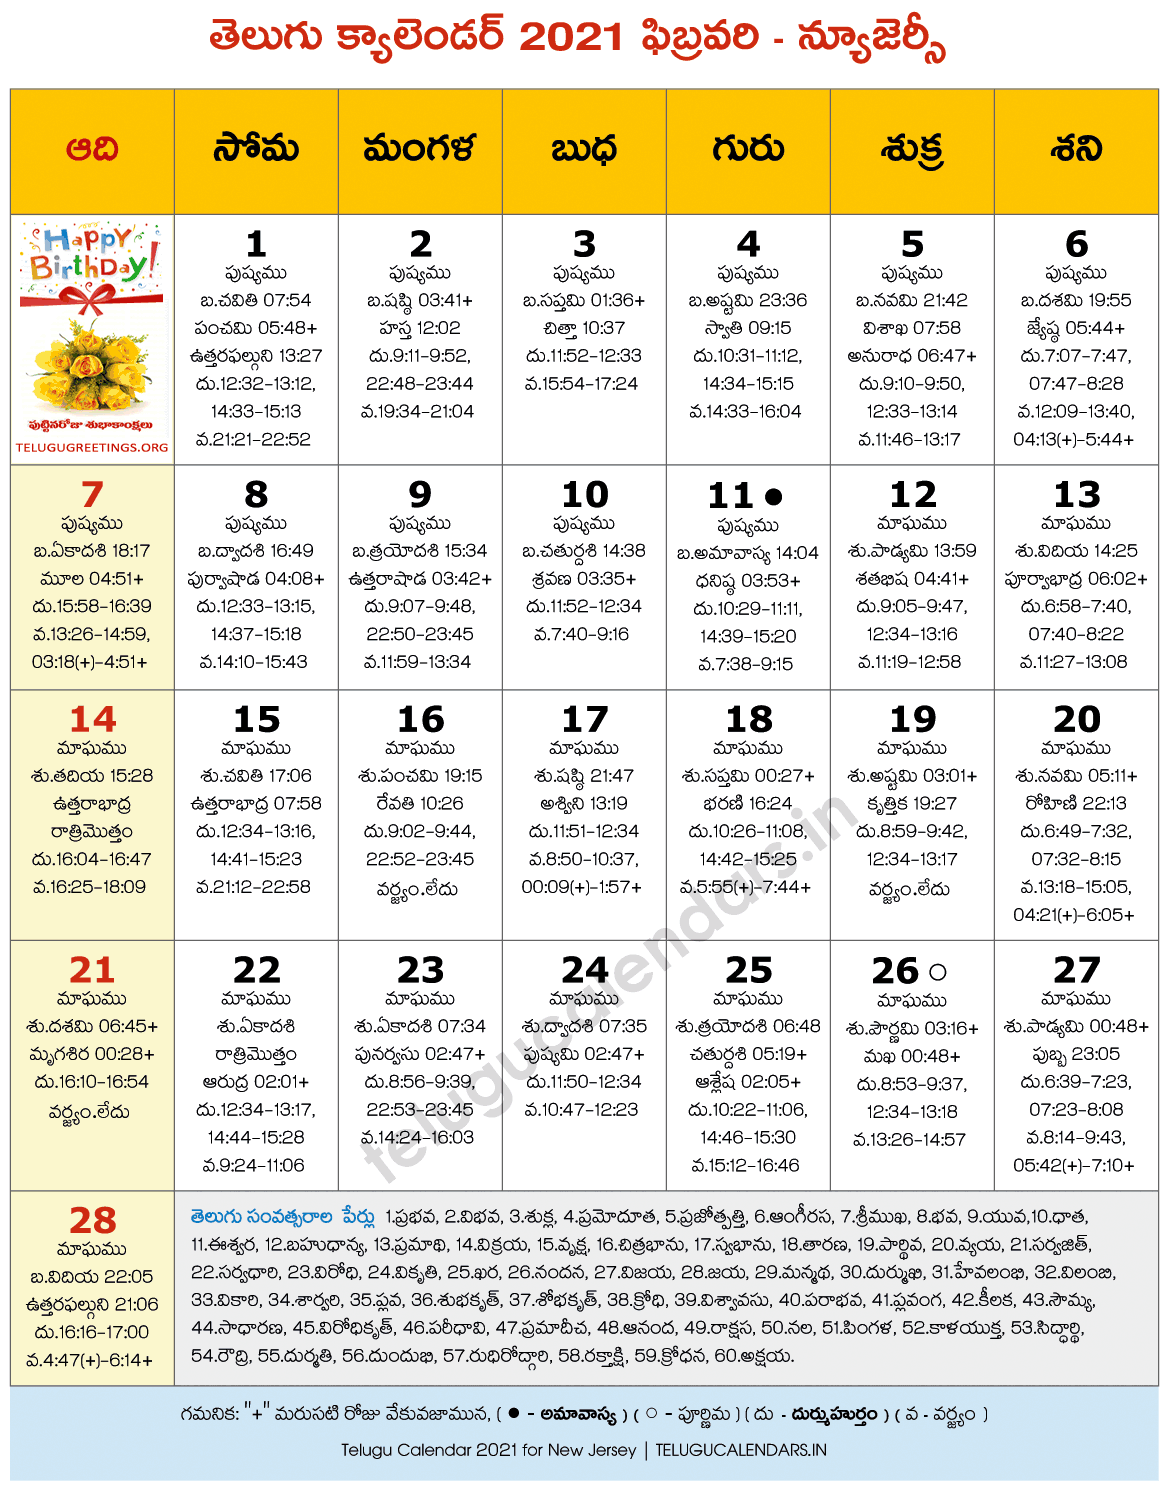 Telugu Calendar 2022 Nj New Jersey 2021 February Telugu Calendar - 2022 Telugu Calendar Pdf